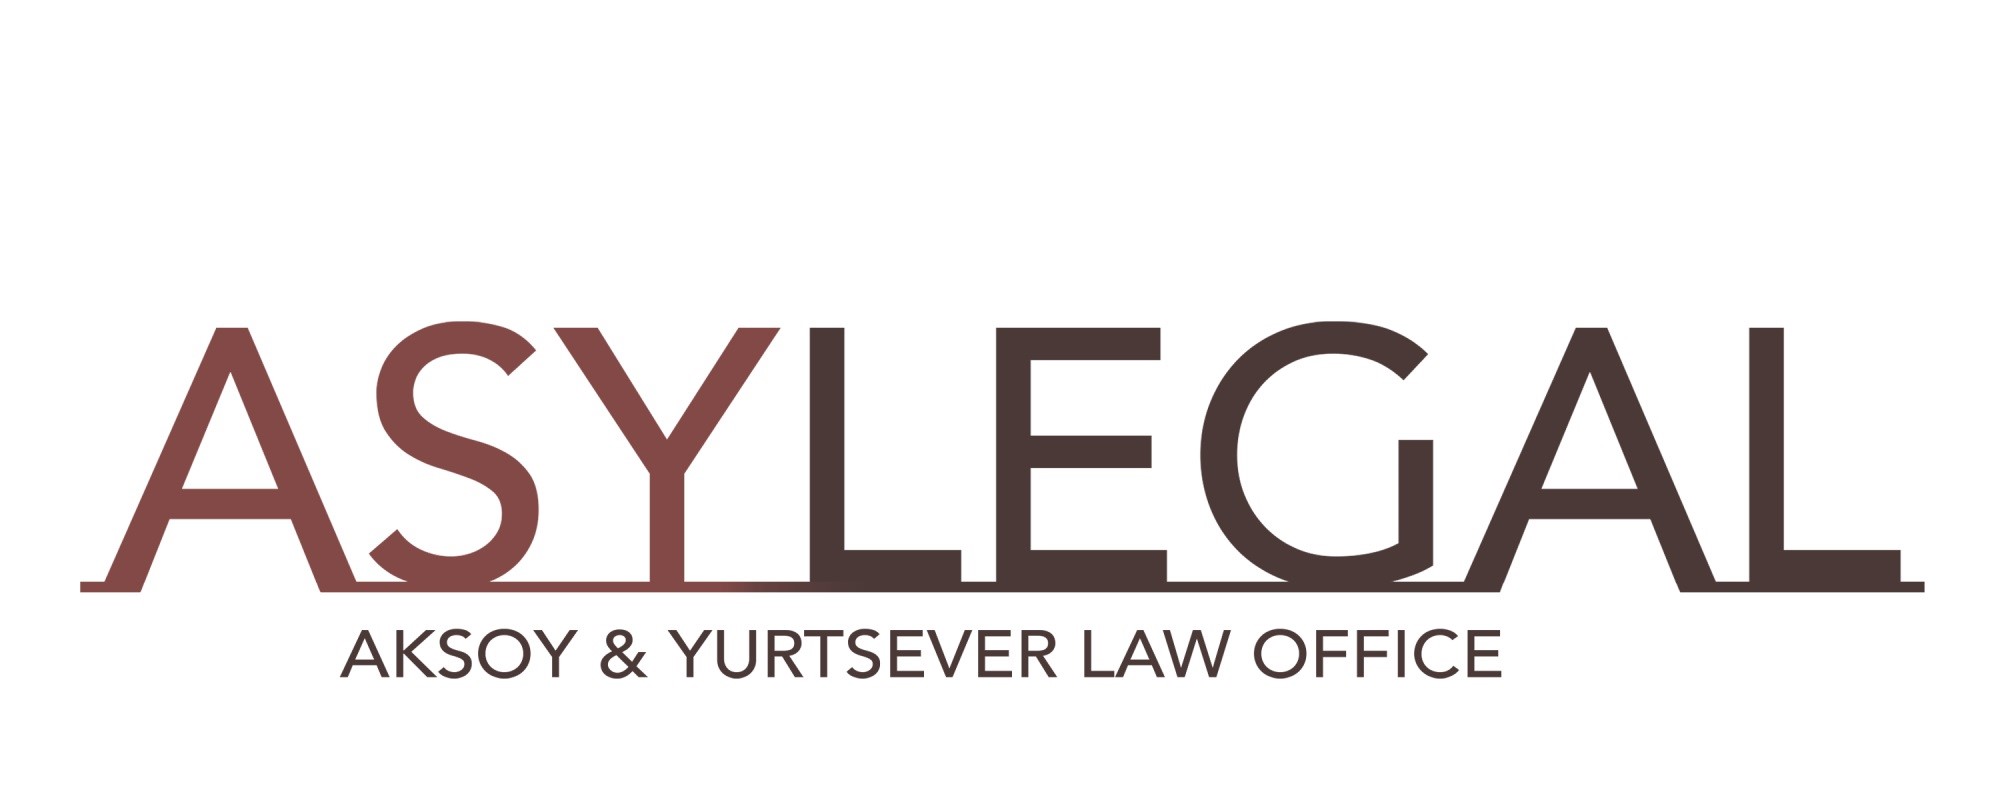 Winner Image - ASY LEGAL Law Office